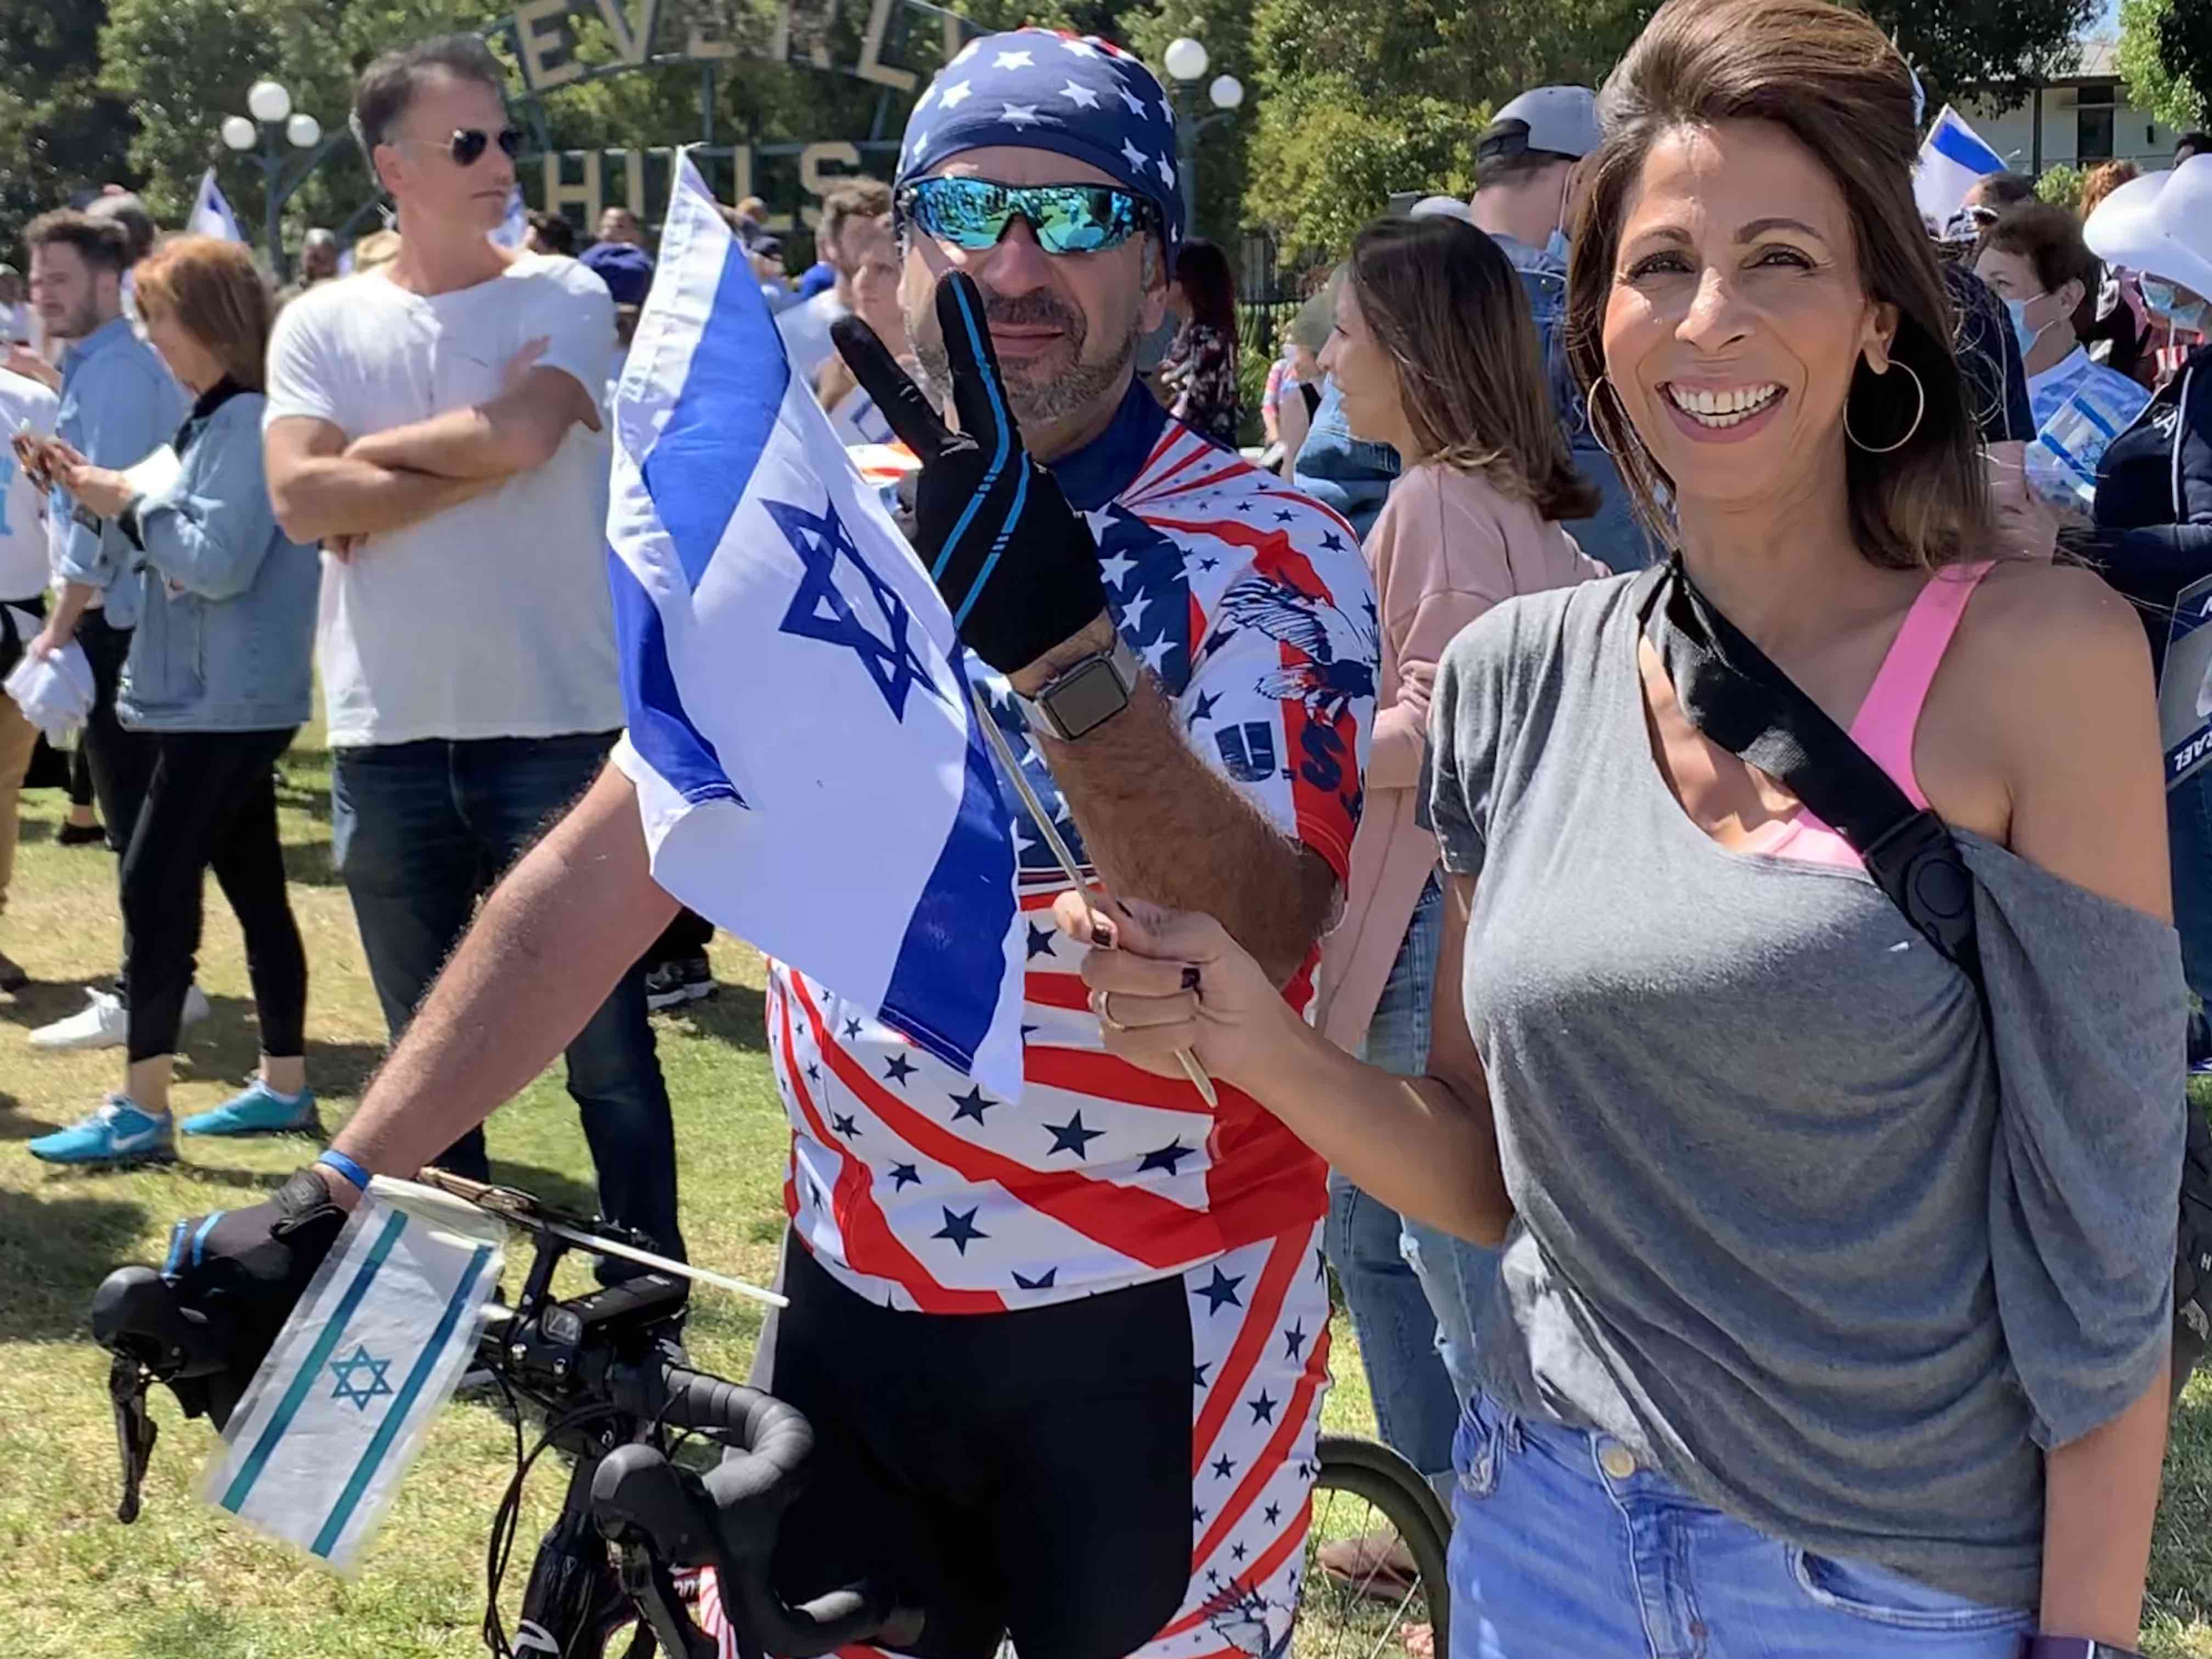 Bicycle guy at pro-Israel rally (Joel Pollak)